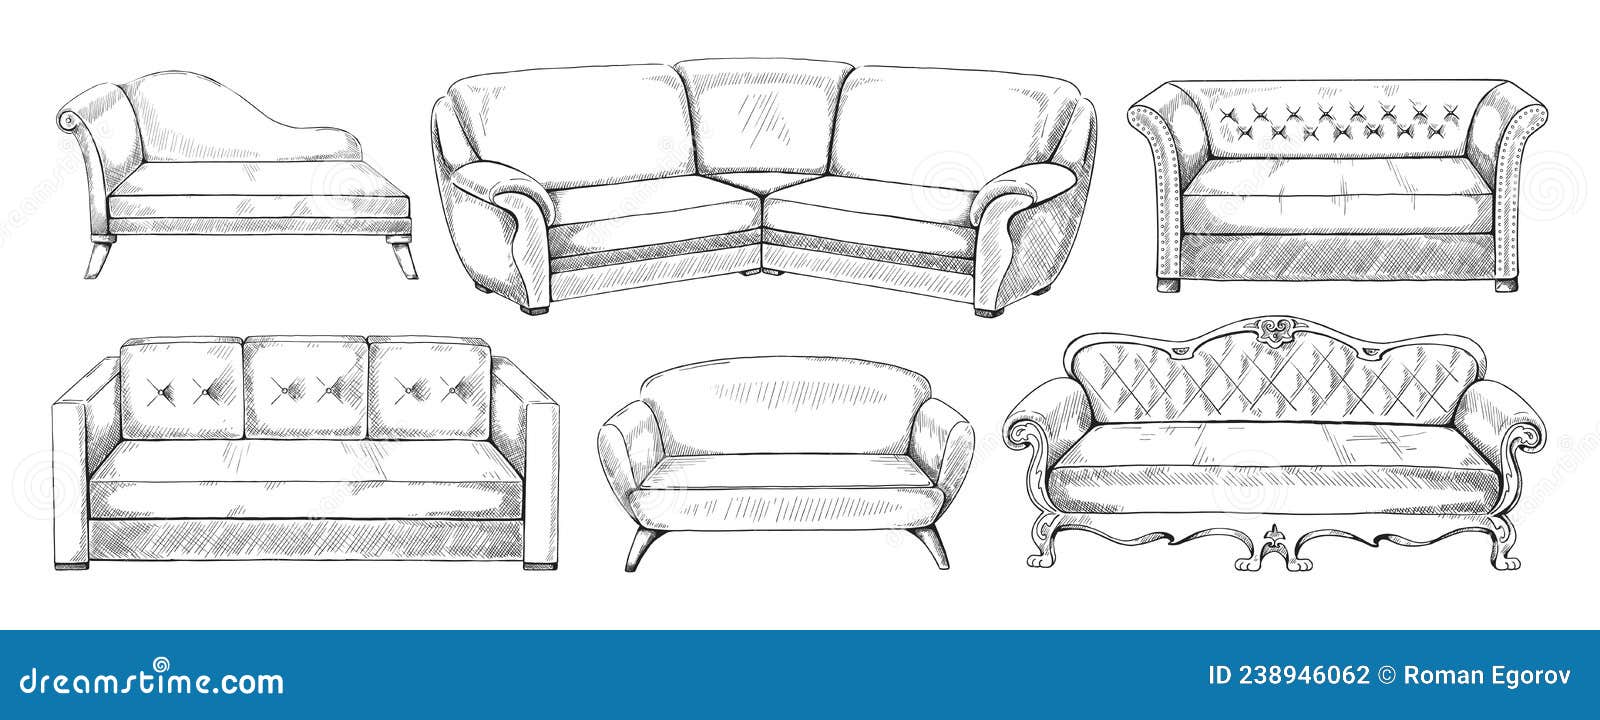 Sketch sofa furniture comfort relax image Vector Image